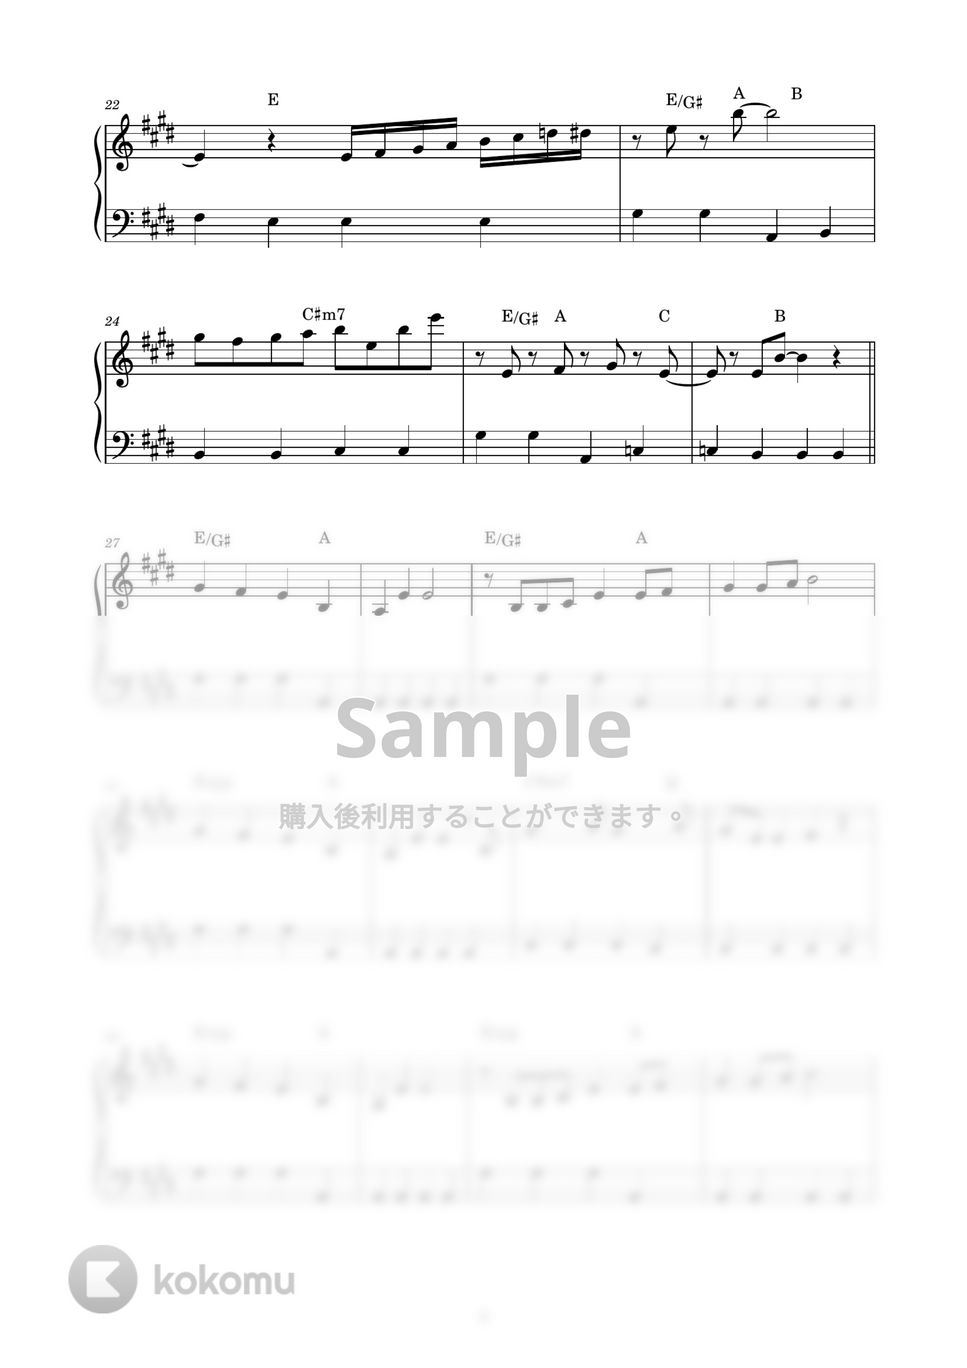 Ado - 私は最強 (ウタ from ONE PIECE FILM RED) (ピアノ楽譜 / かんたん両手 / 歌詞付き / ドレミ付き / 初心者向き) by piano.tokyo